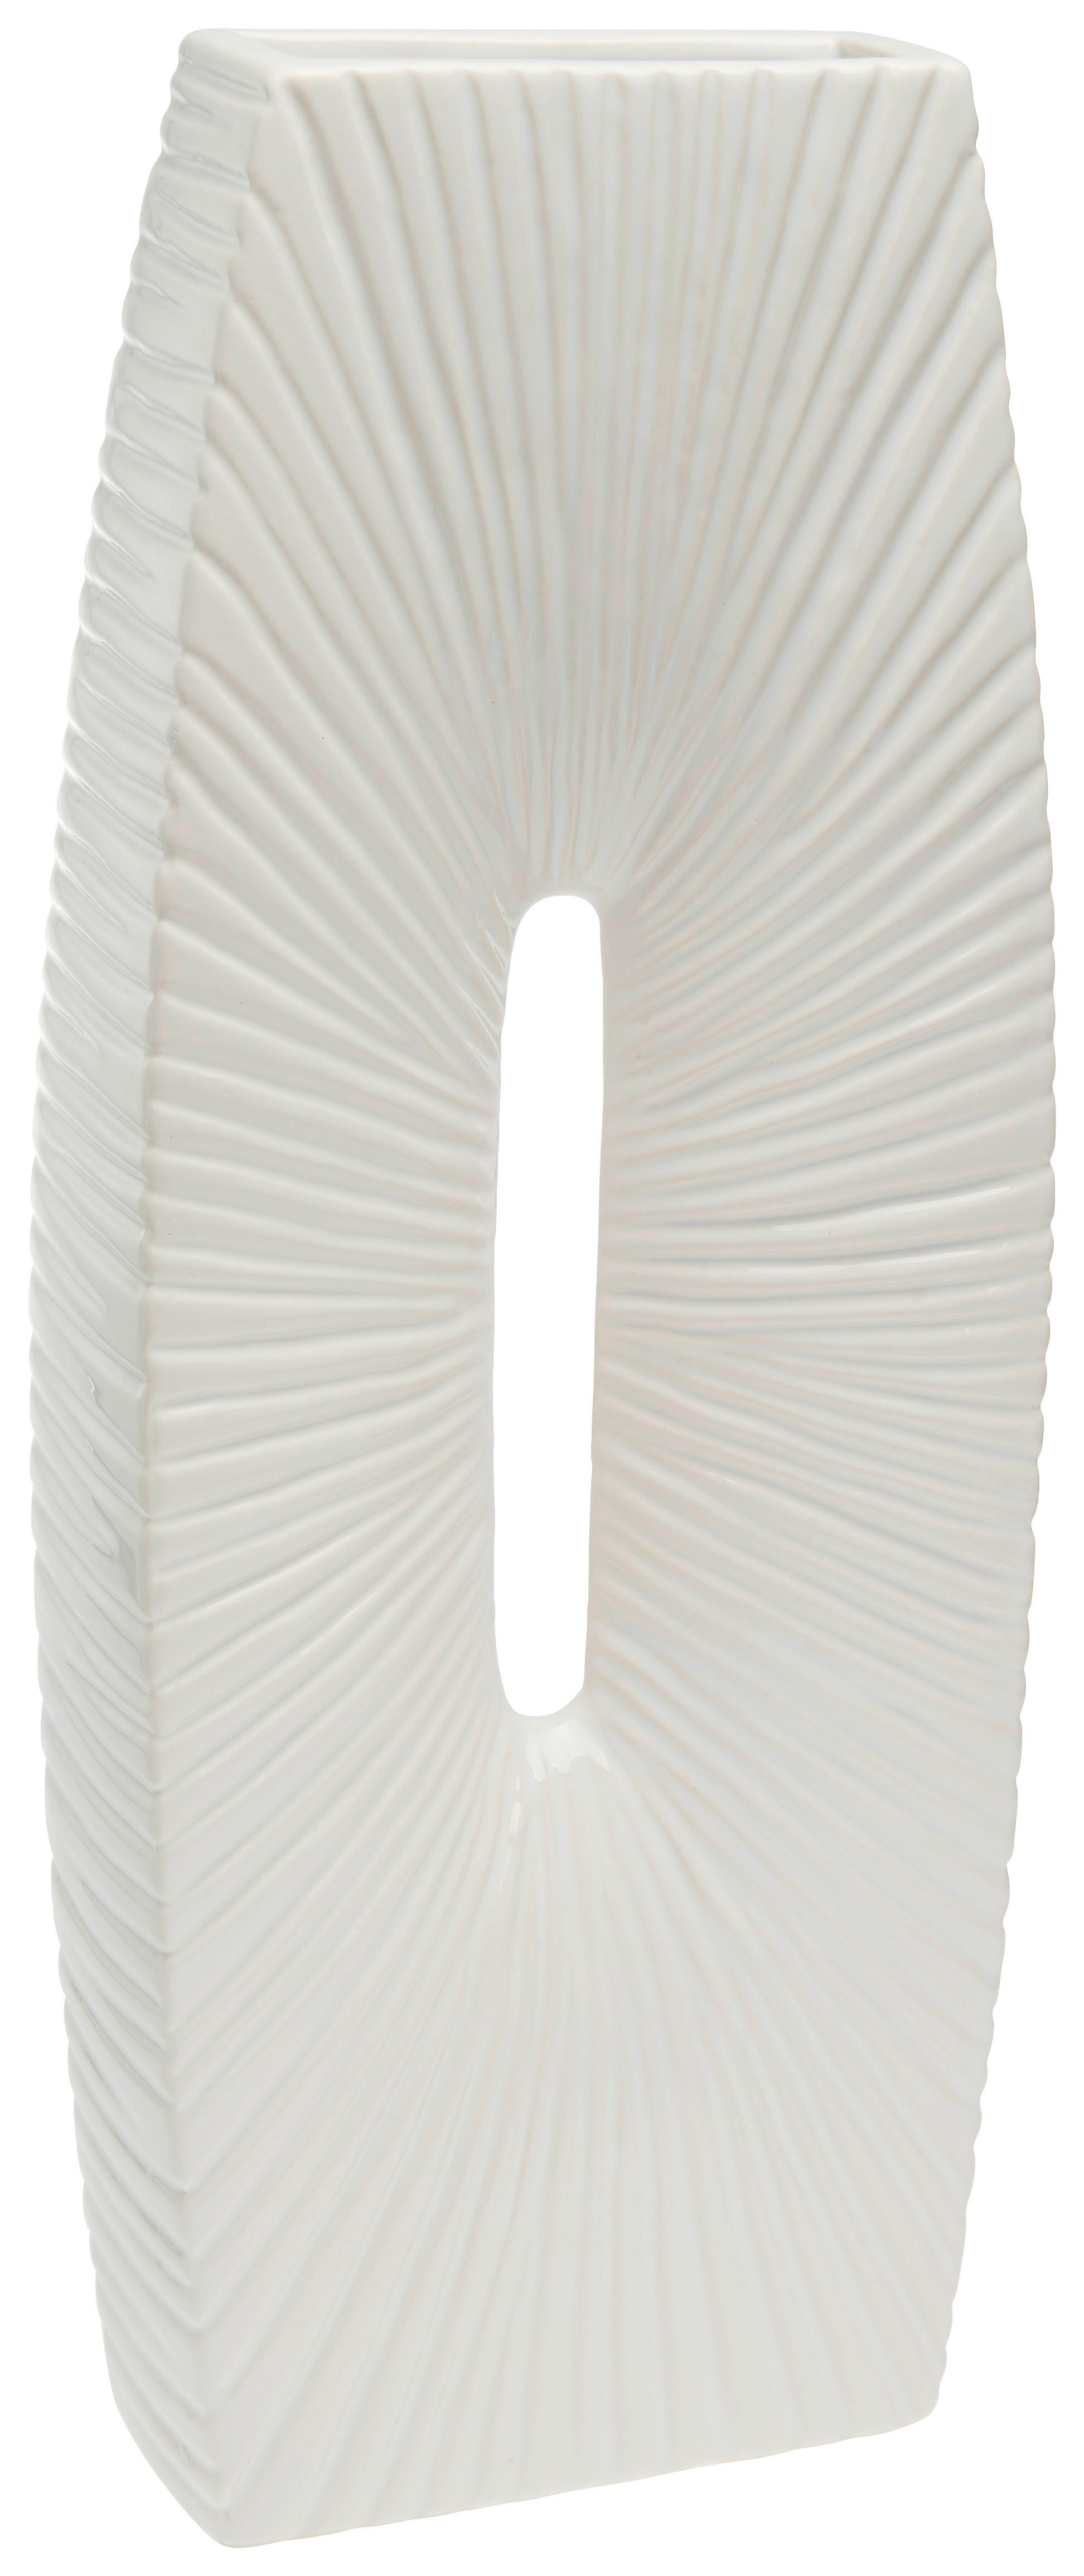 Ambia Home VÁZA, keramika, 41.4 cm - bílá